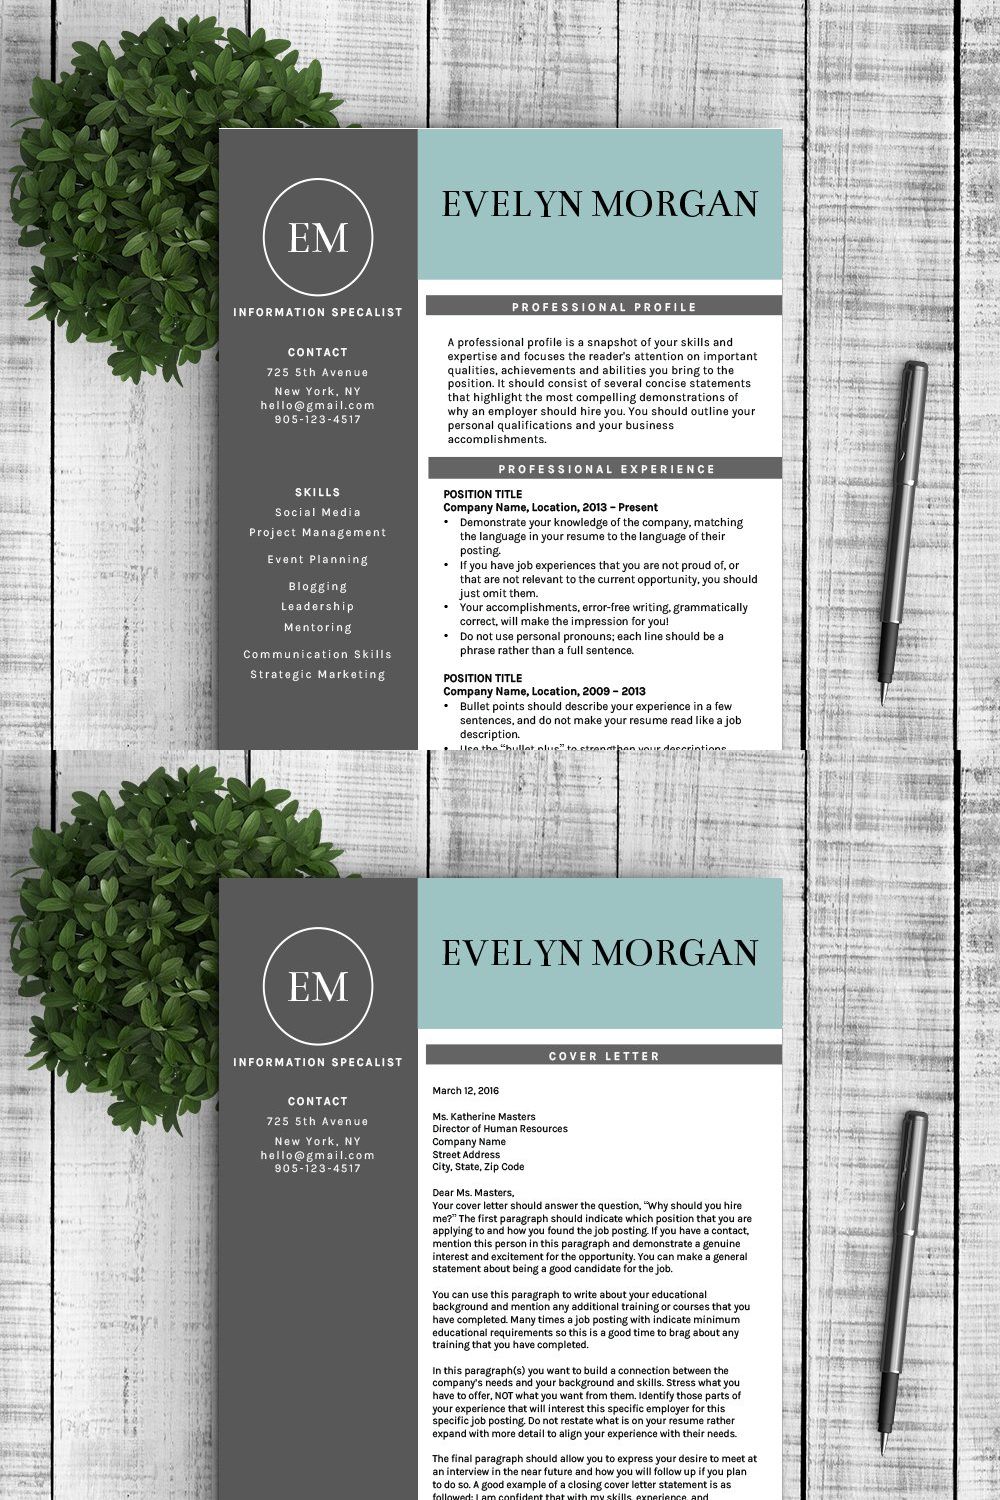 Resume & Cover Letter - Evelyn pinterest preview image.